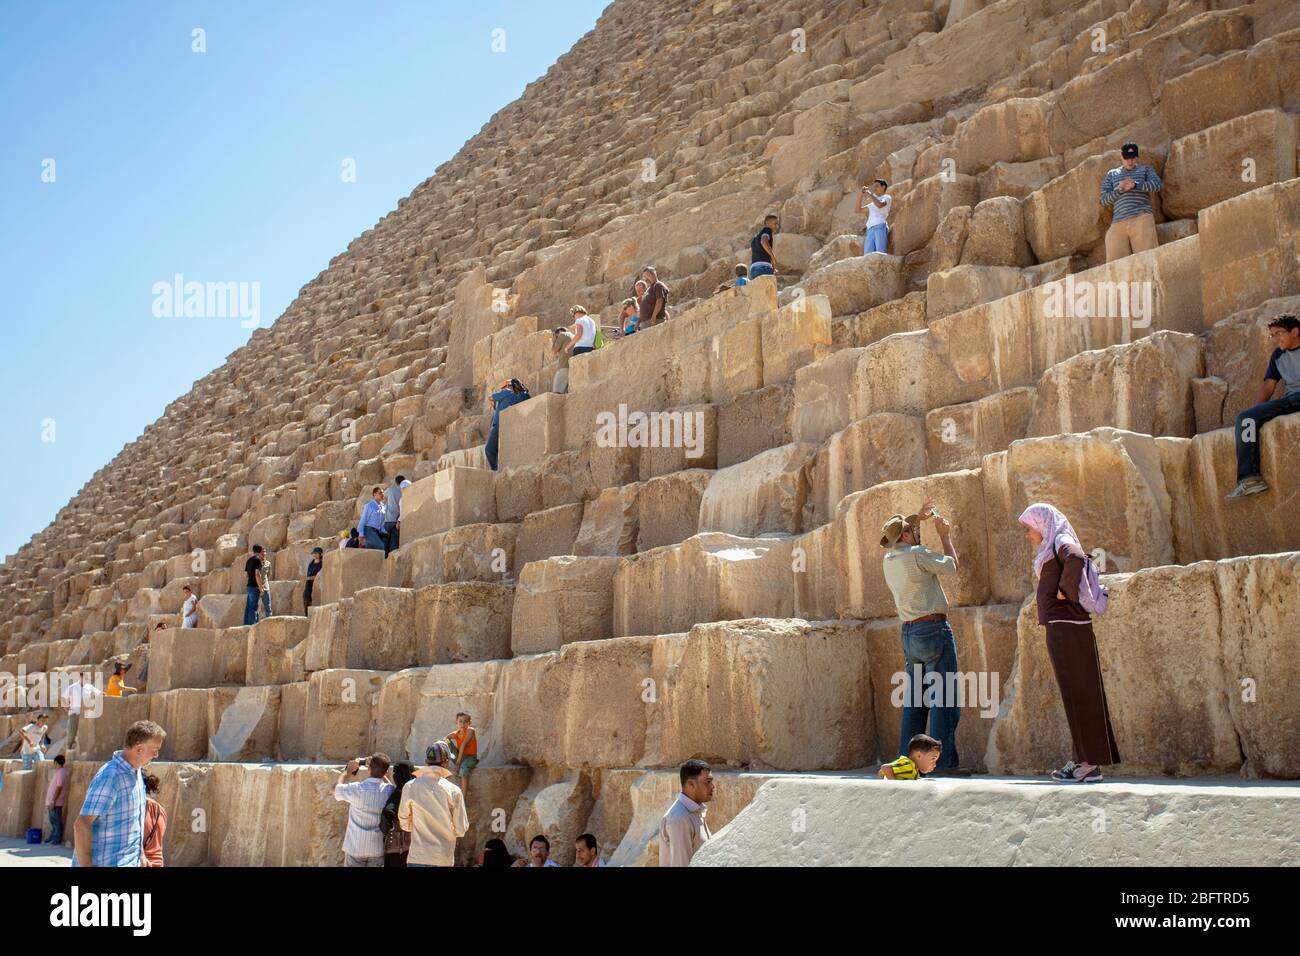 Tourists Climbing On The Great Pyramid of Giza, Egypt. Stock Photo